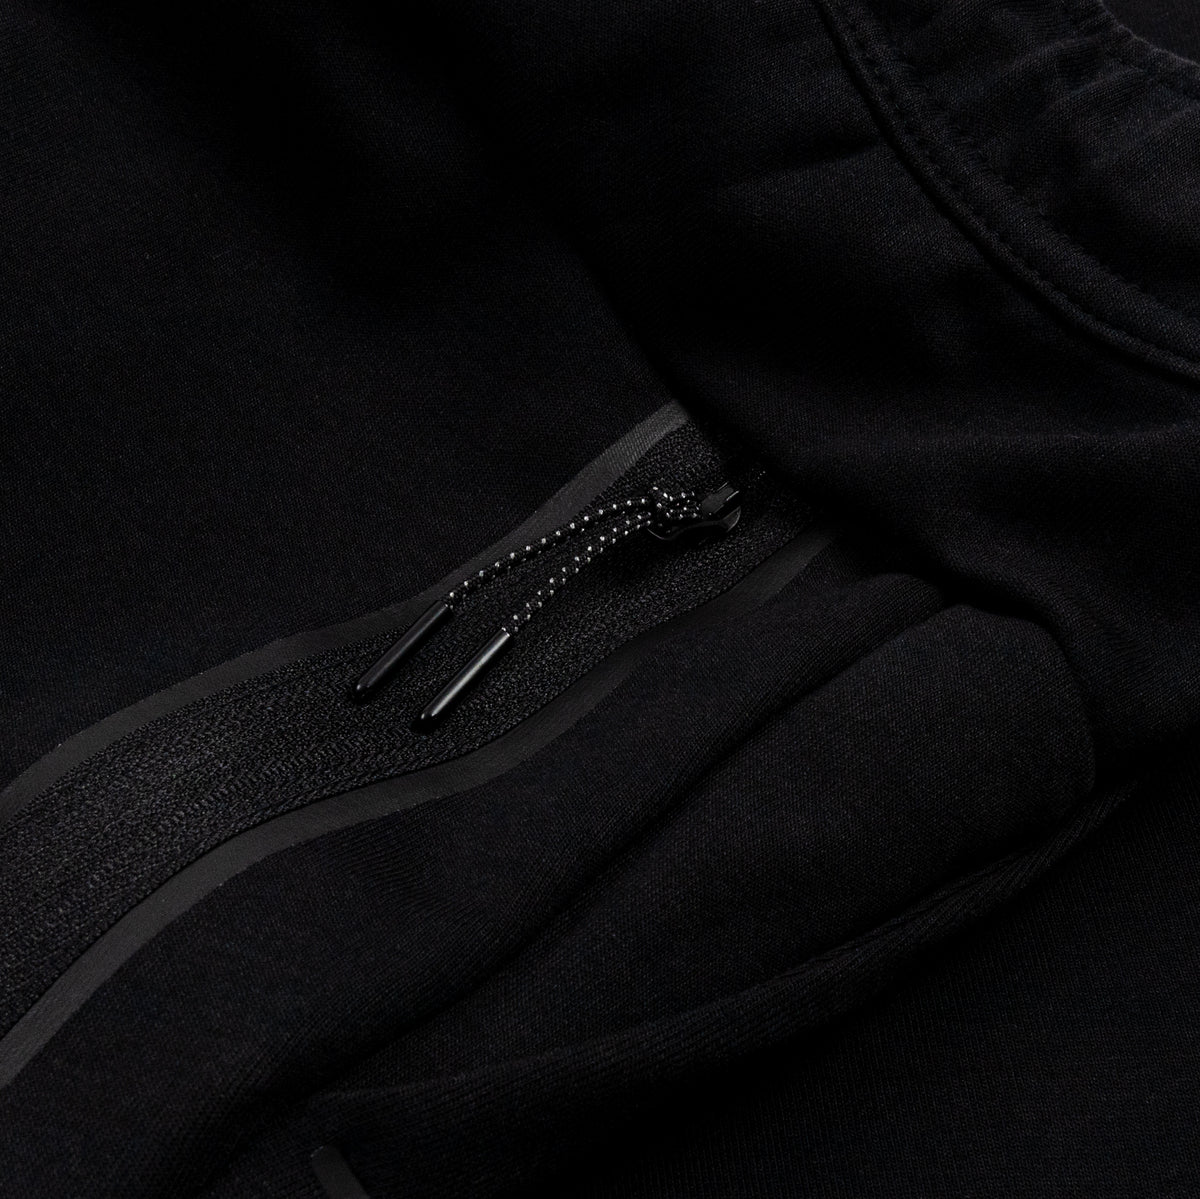 Nike Tech Mens Fleece Pants Black 585204-010 – Shoe Palace